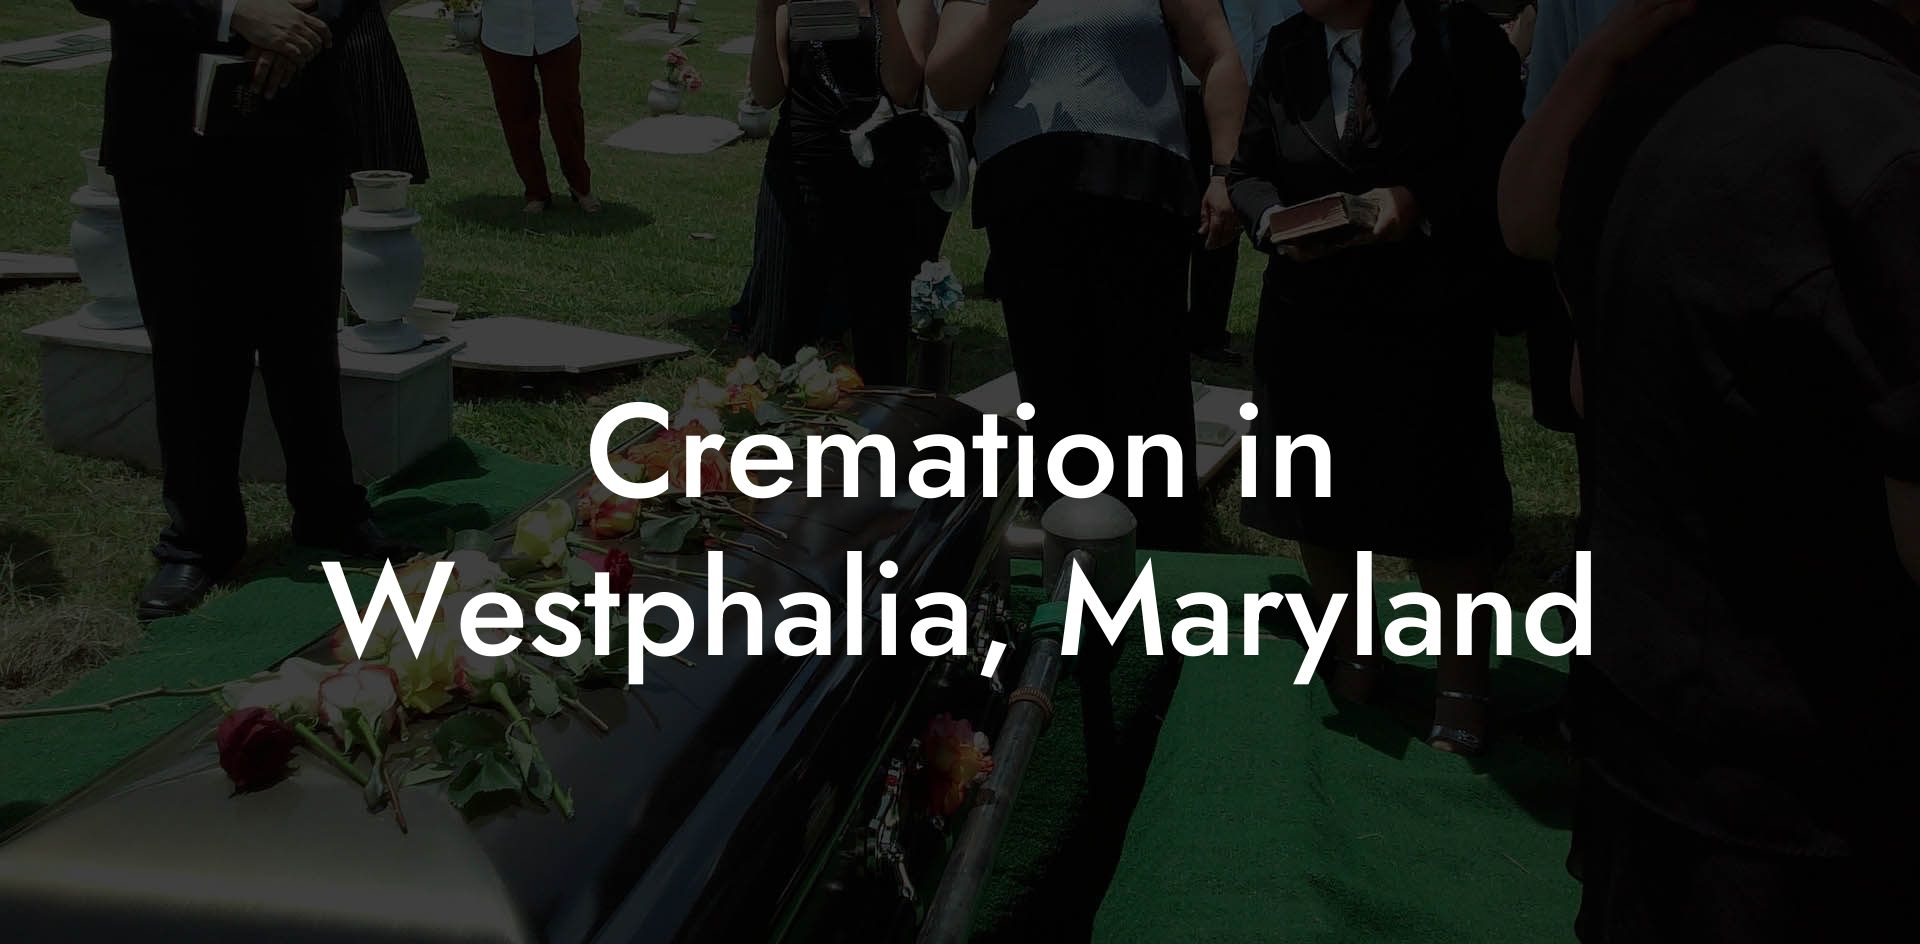 Cremation in Westphalia, Maryland